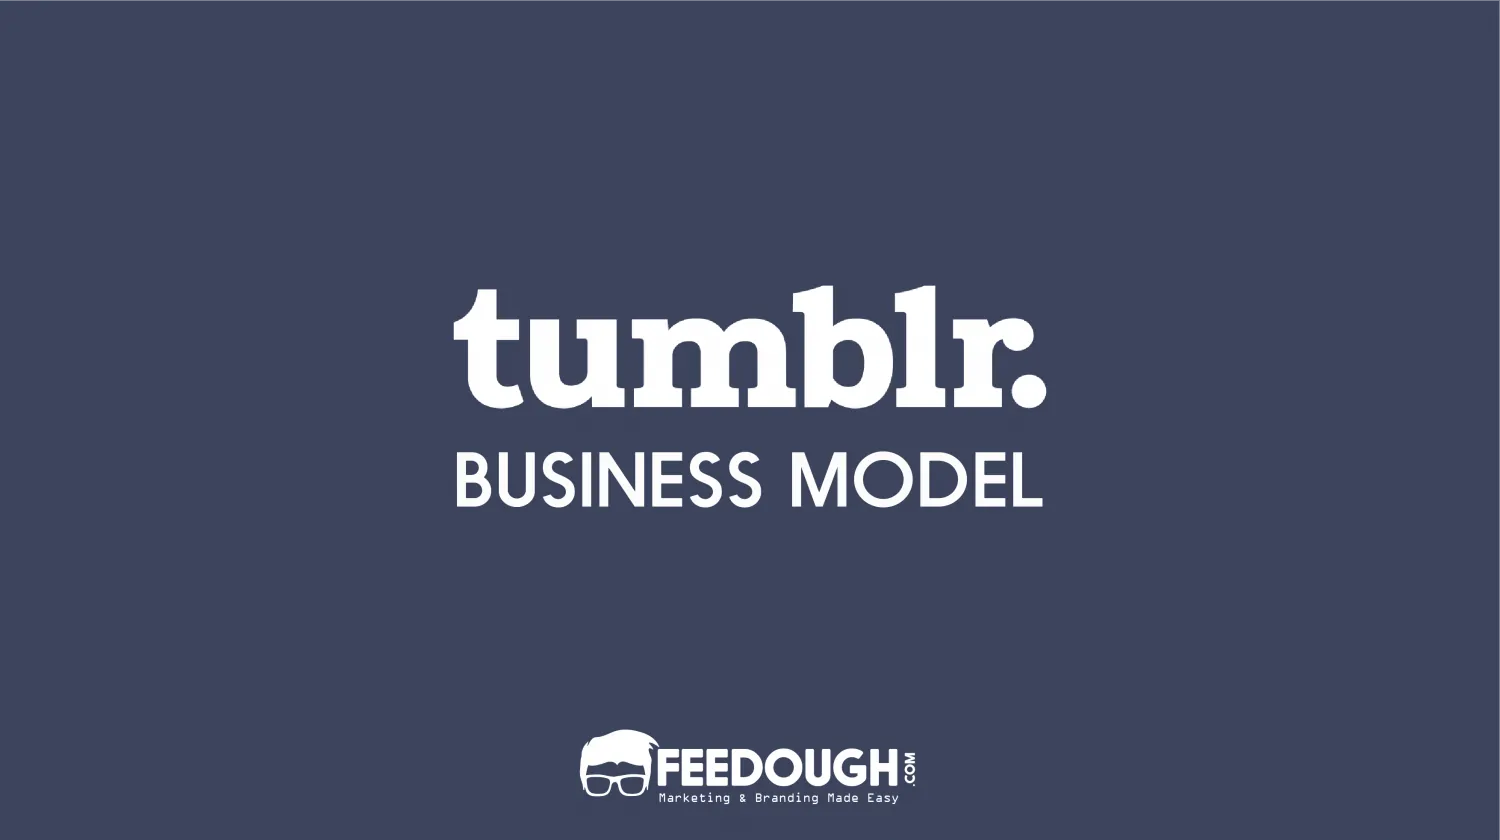 Tumblr Business Model | How does Tumblr make money?